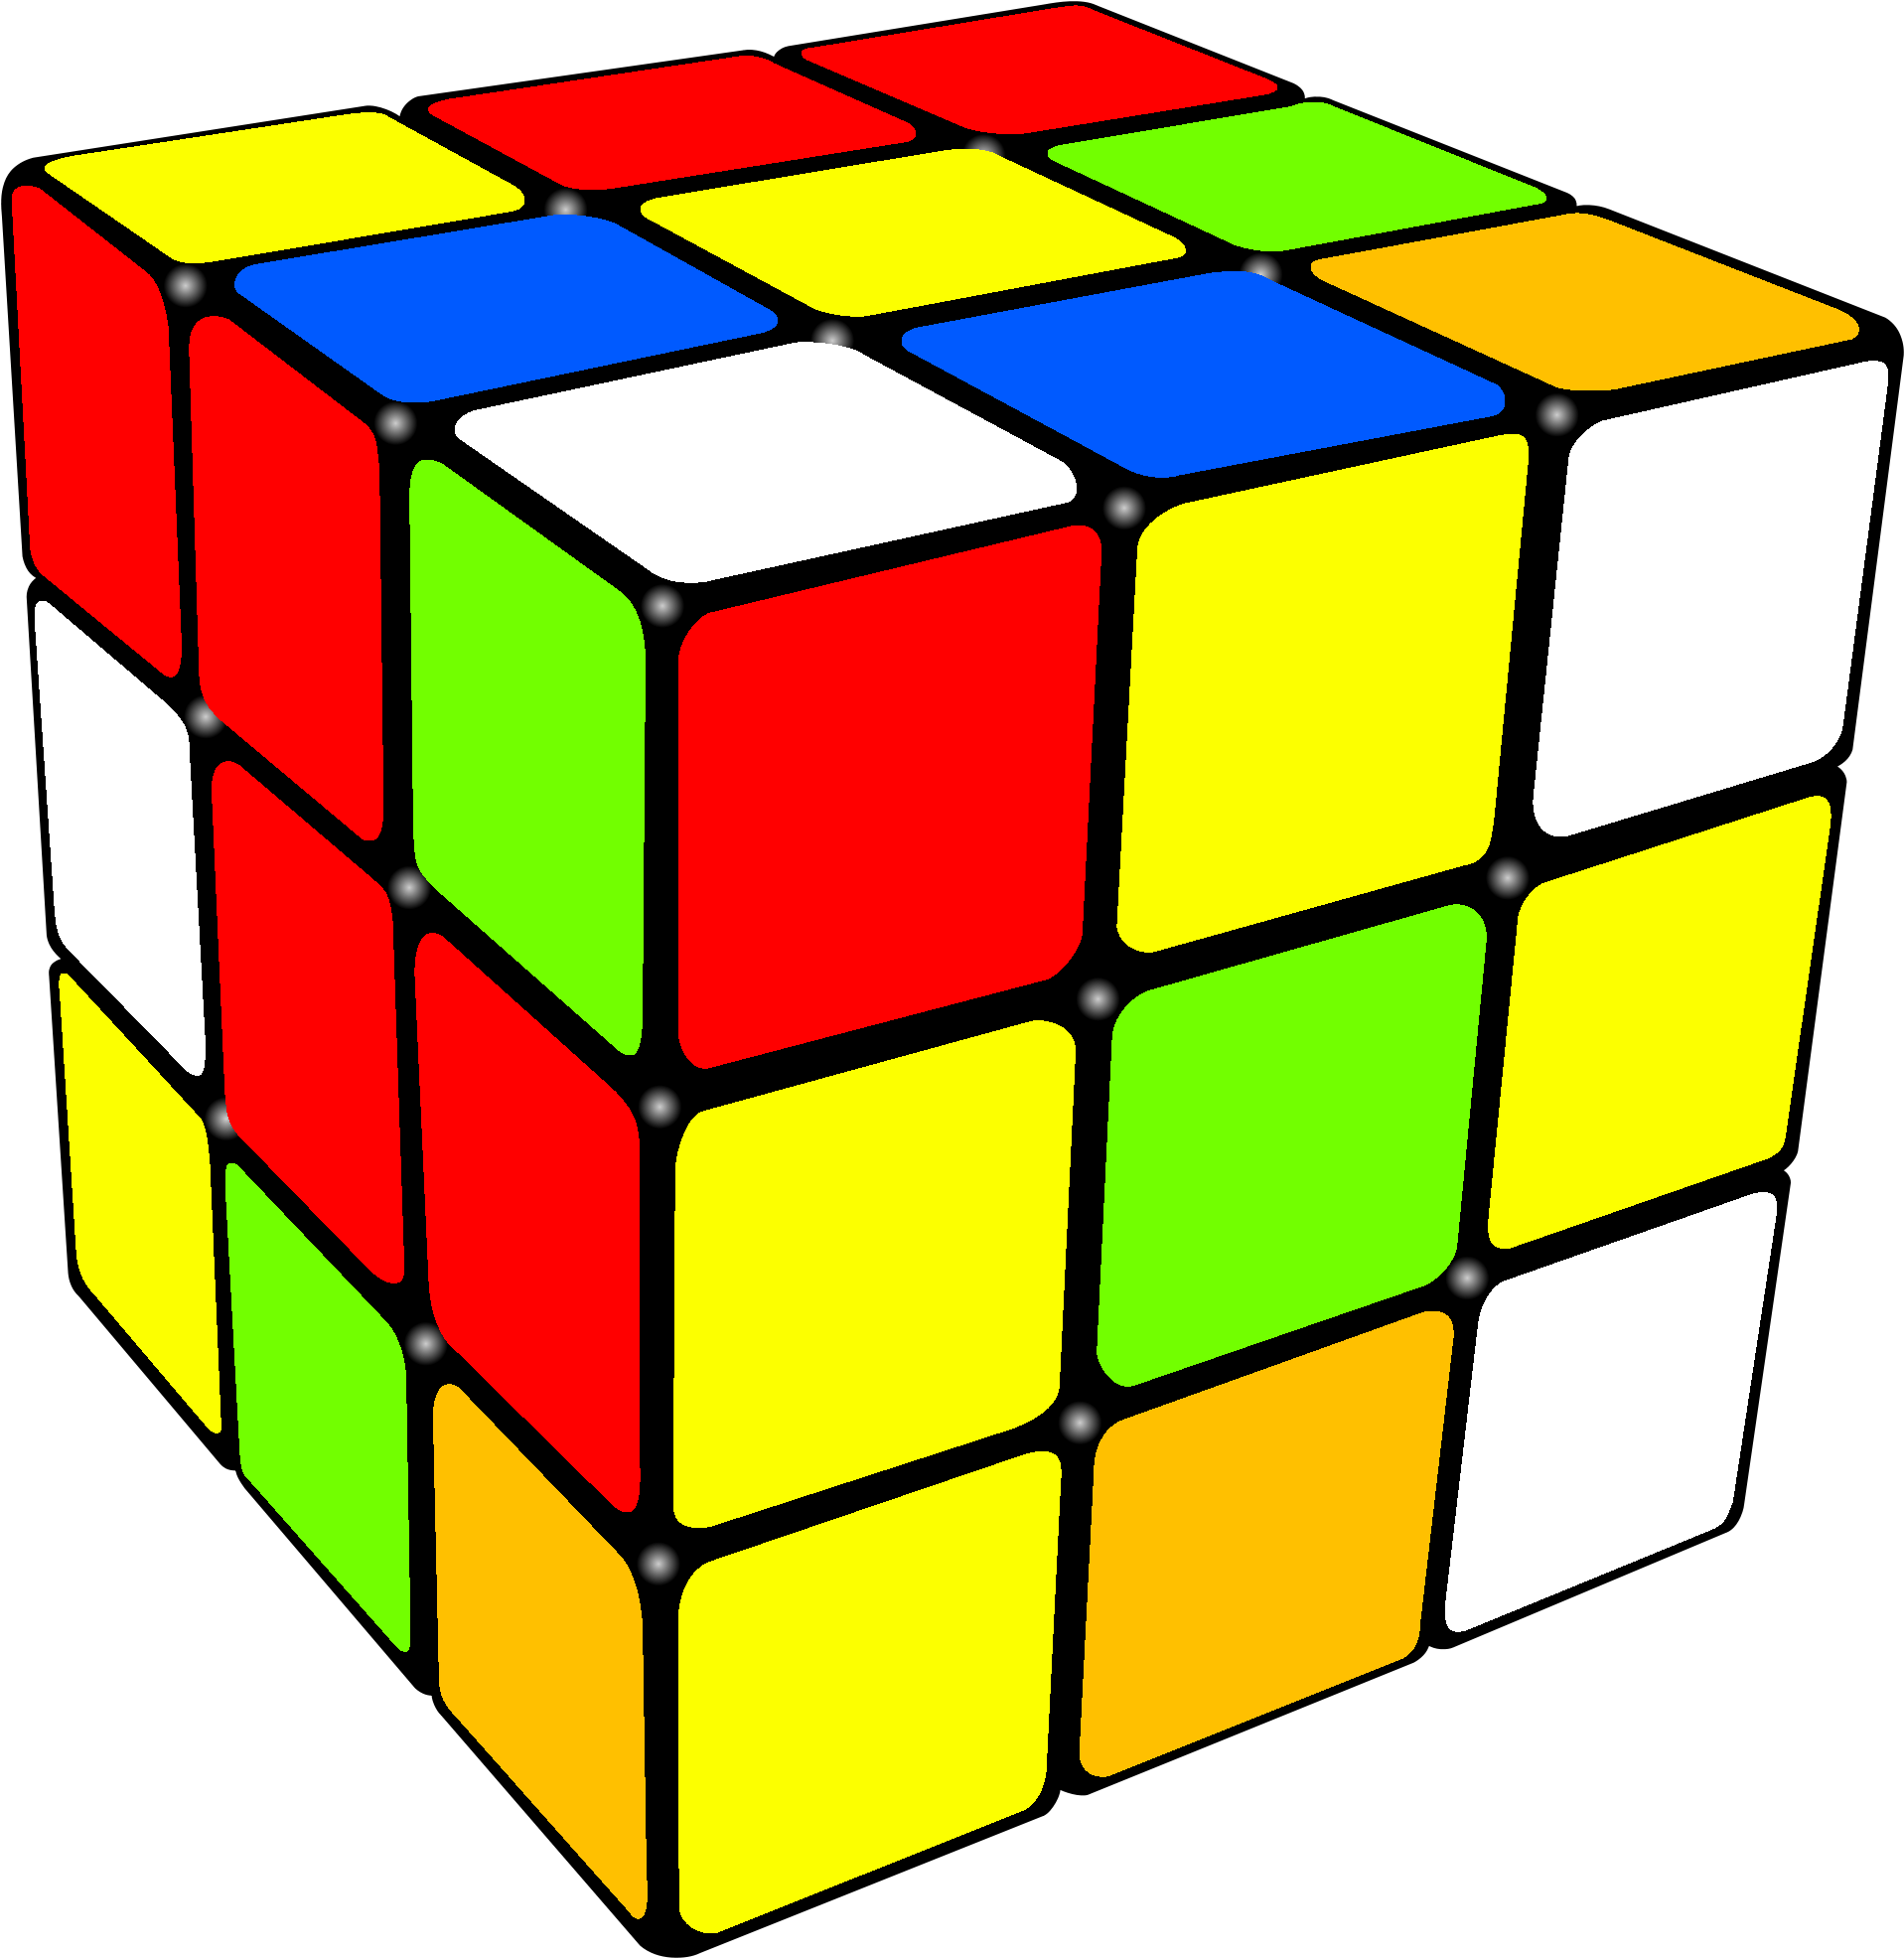 Rubik’s Cube PNG Background Isolated Image